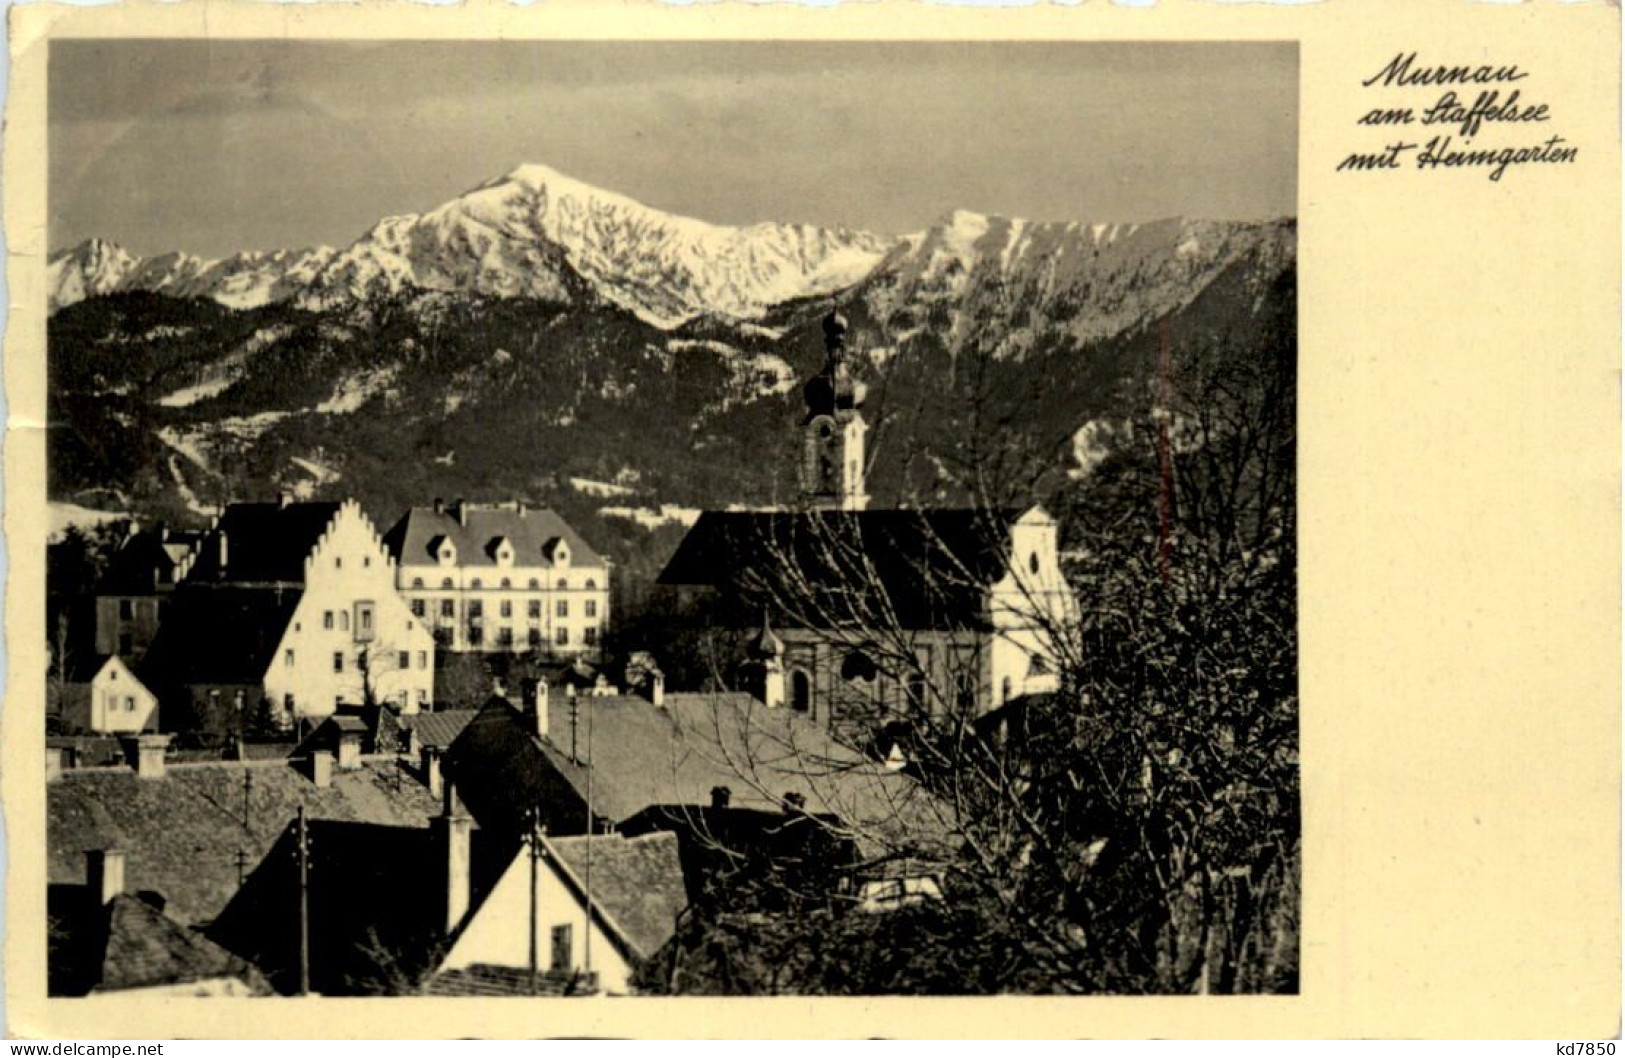 Murnau Am Staffelsee Mit Heimgarten - Garmisch-Partenkirchen